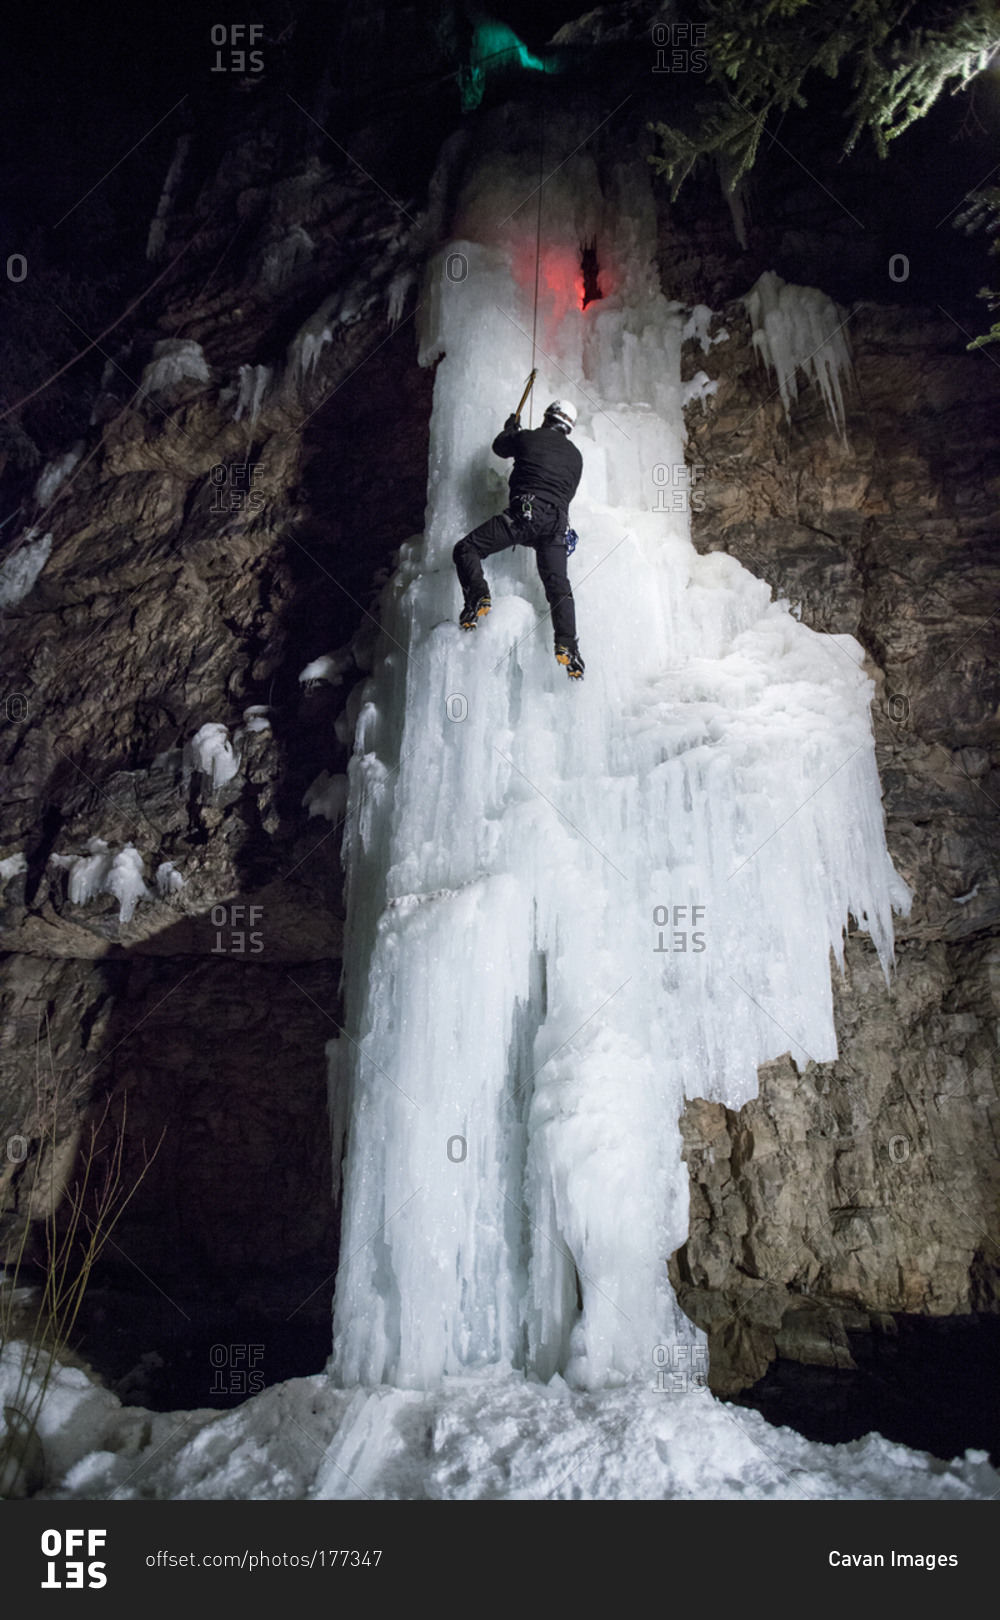 A man ice climbing at night